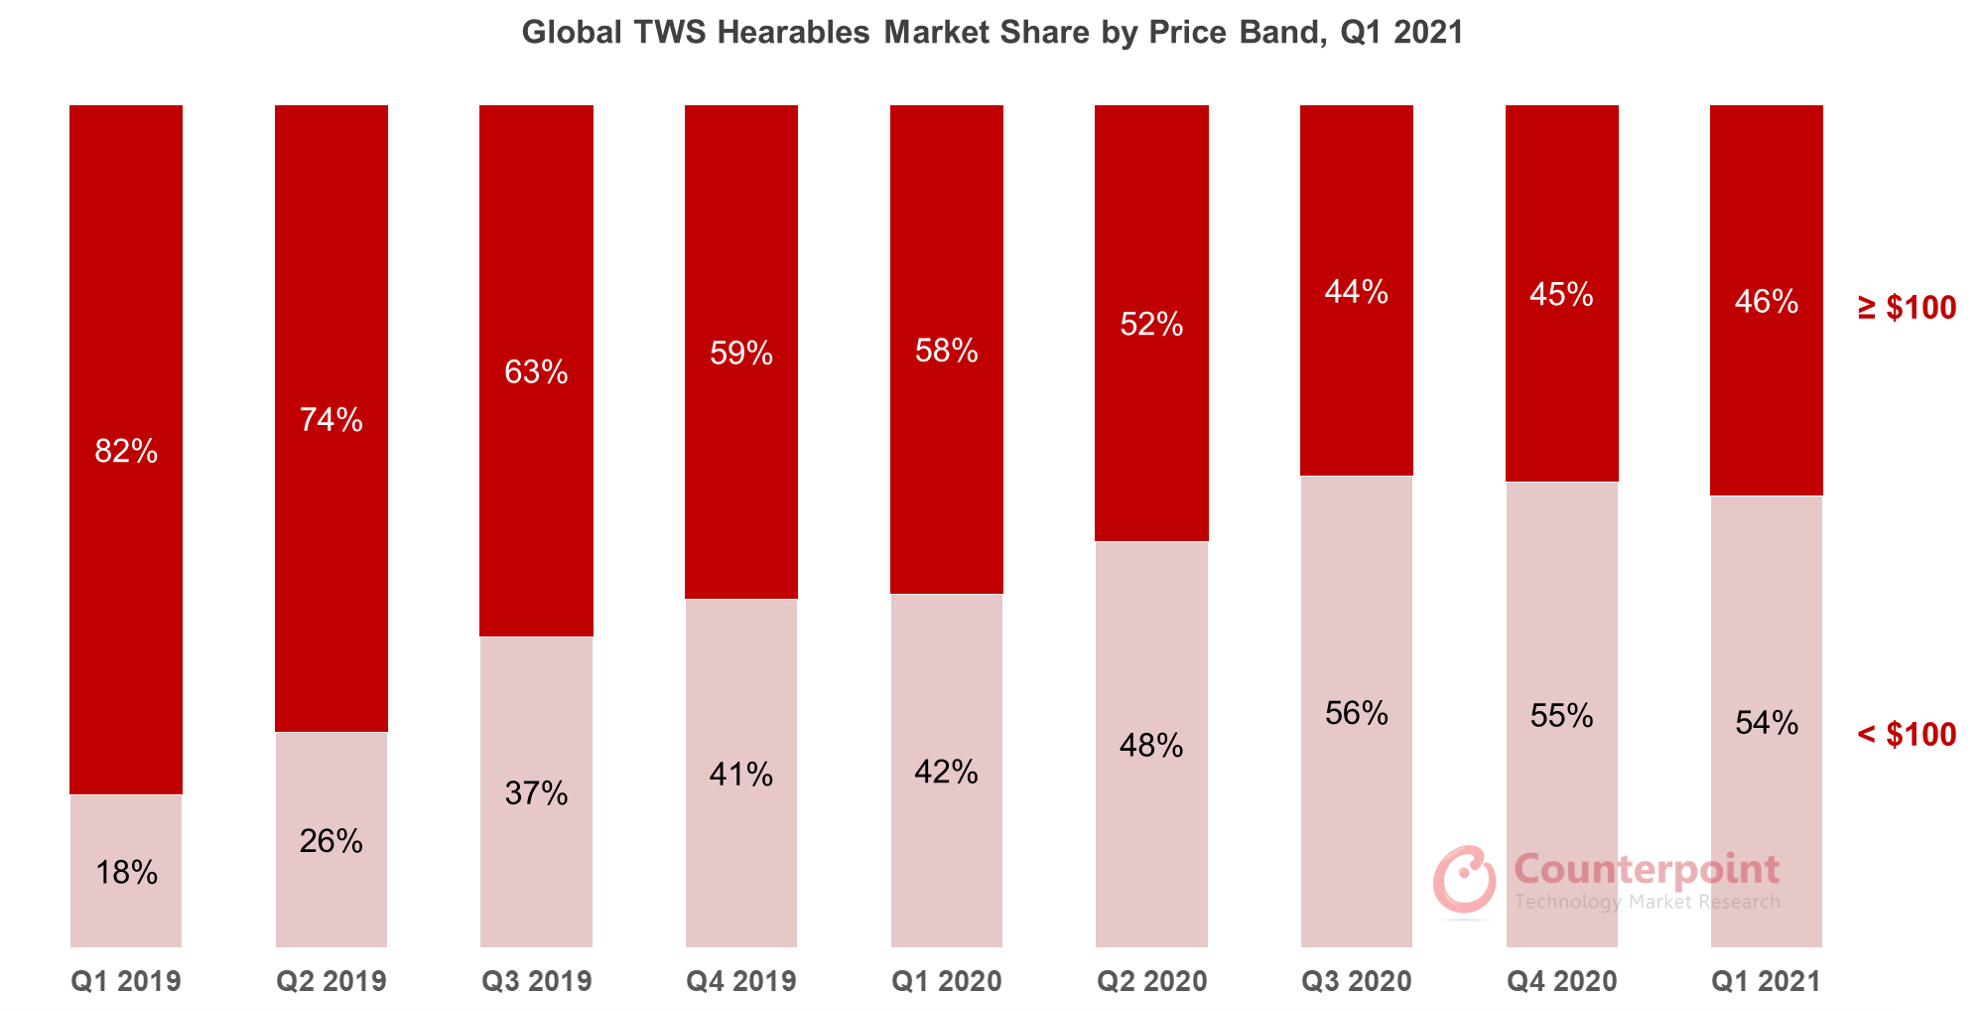 Counterpoint Research全球TWS听取的市场份额按价格频段，第1季度2021